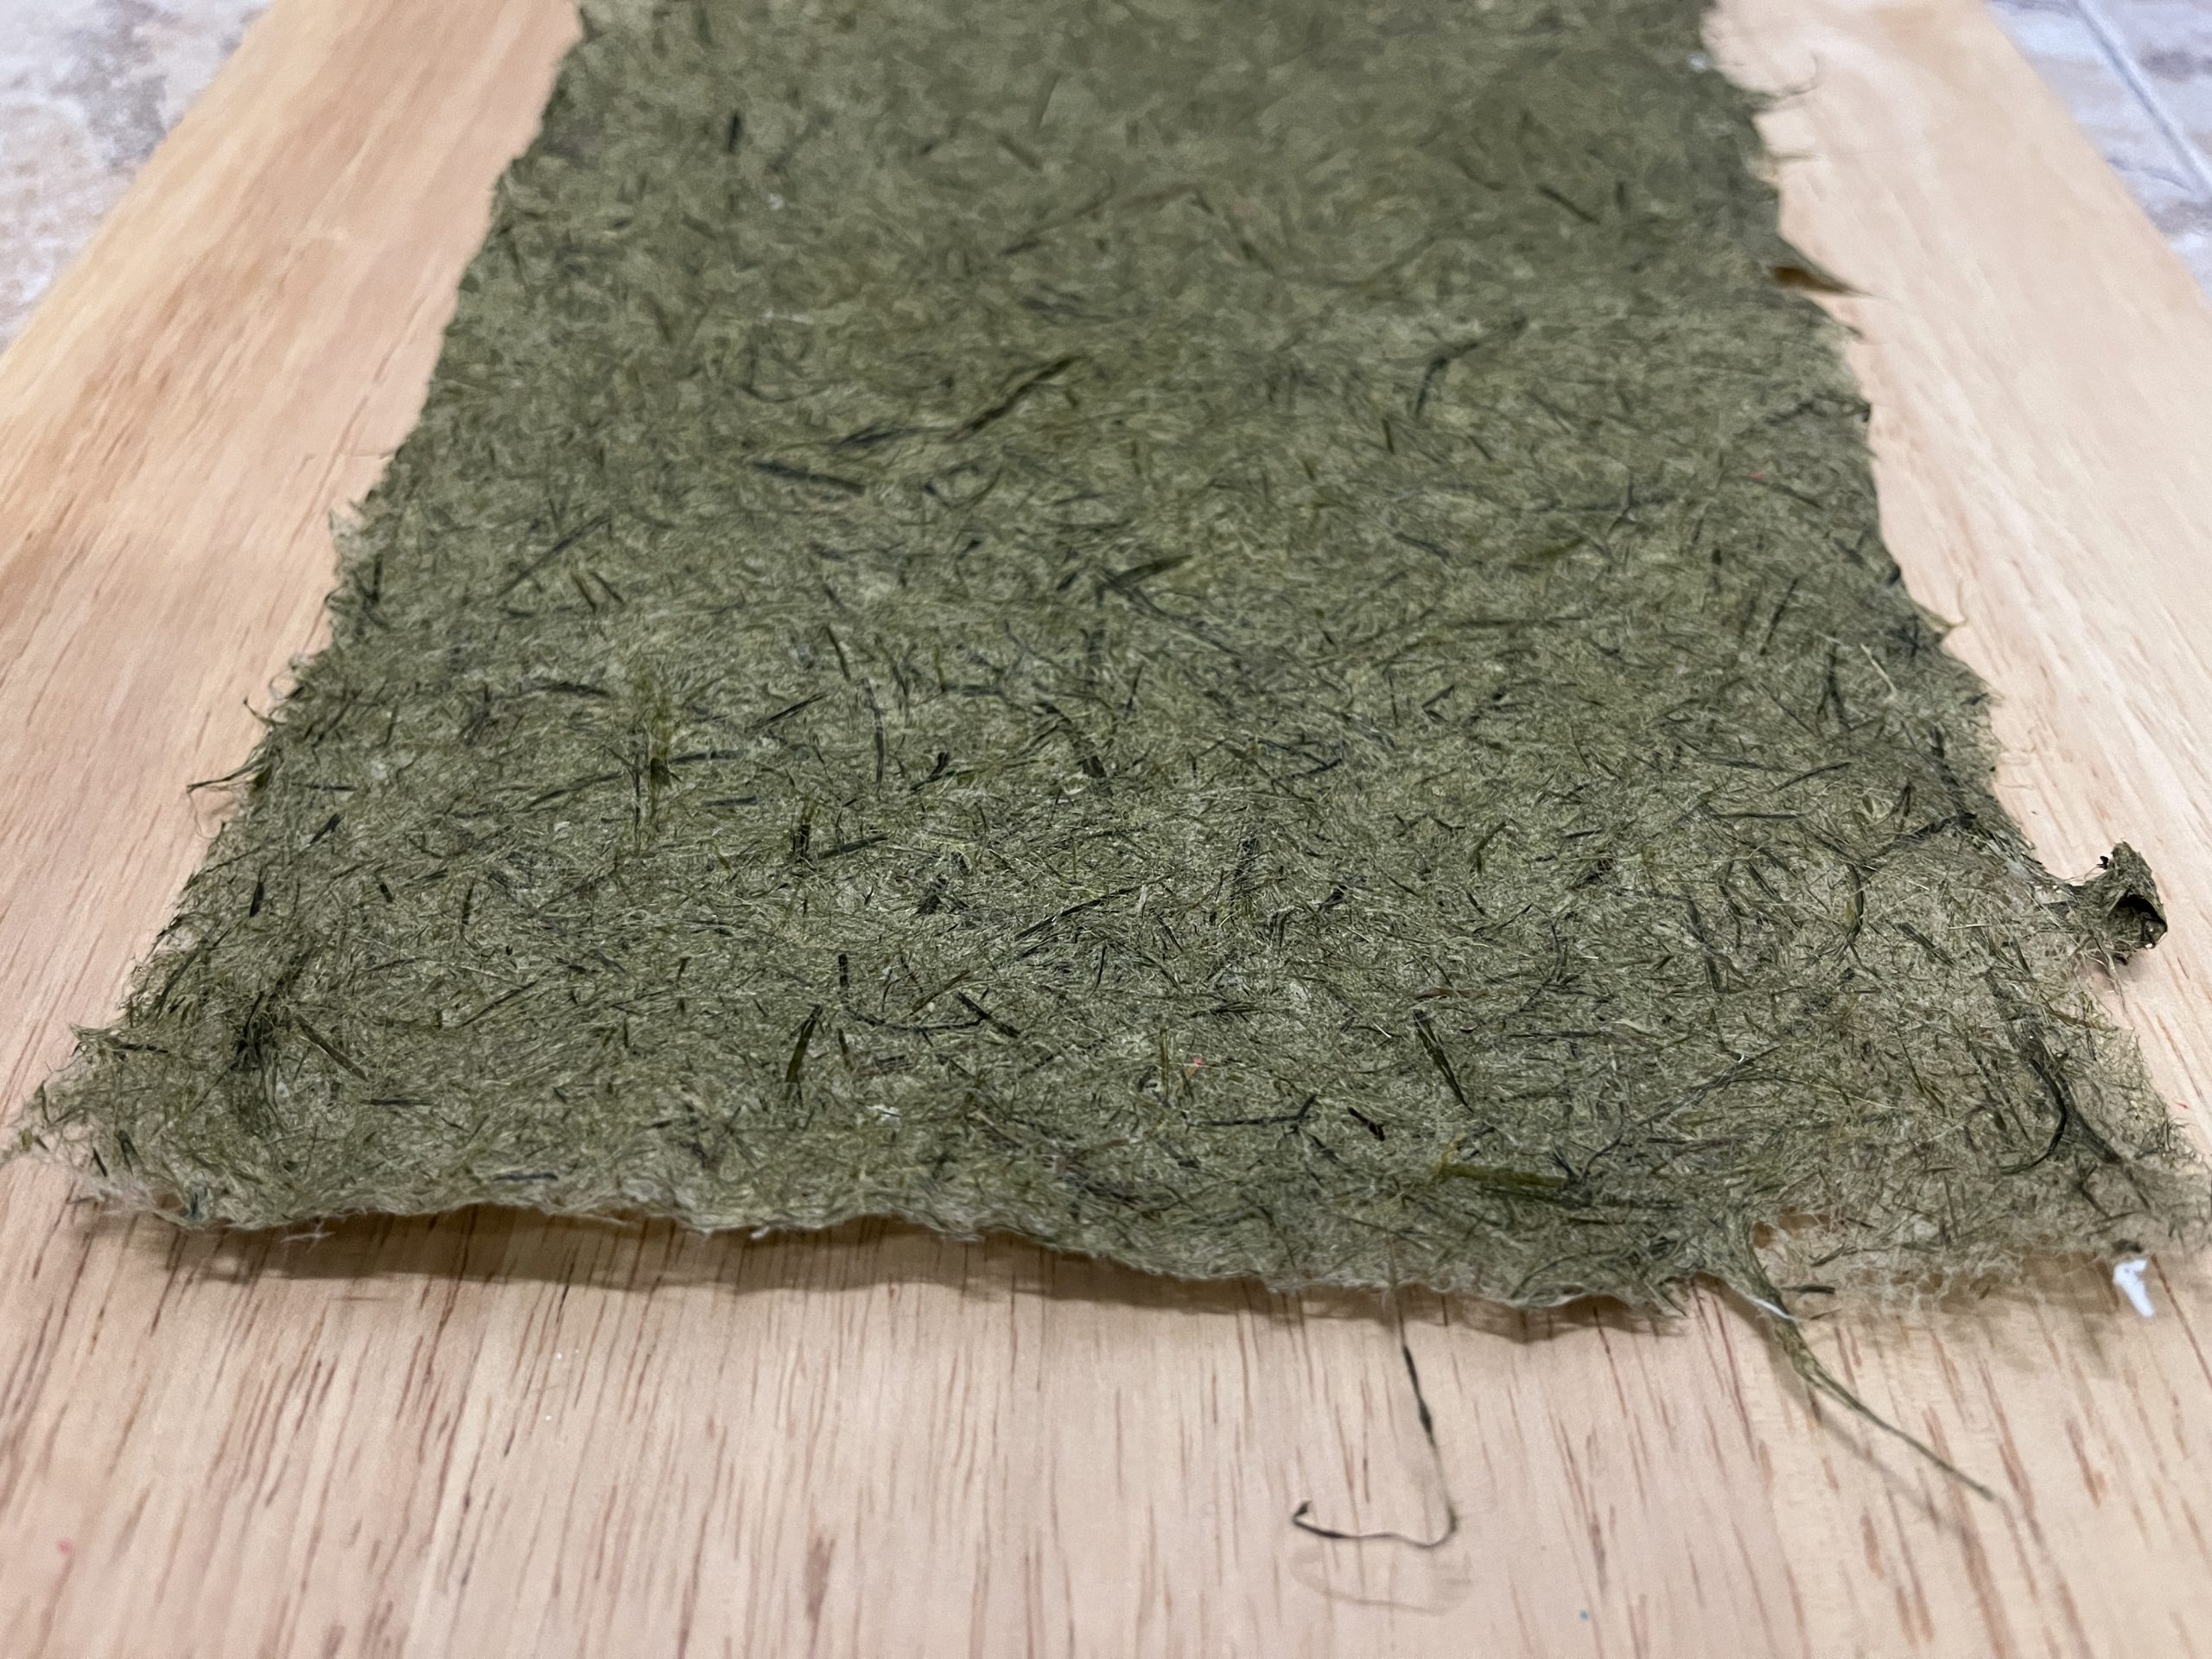 Kann man Papier aus Gras herstellen?